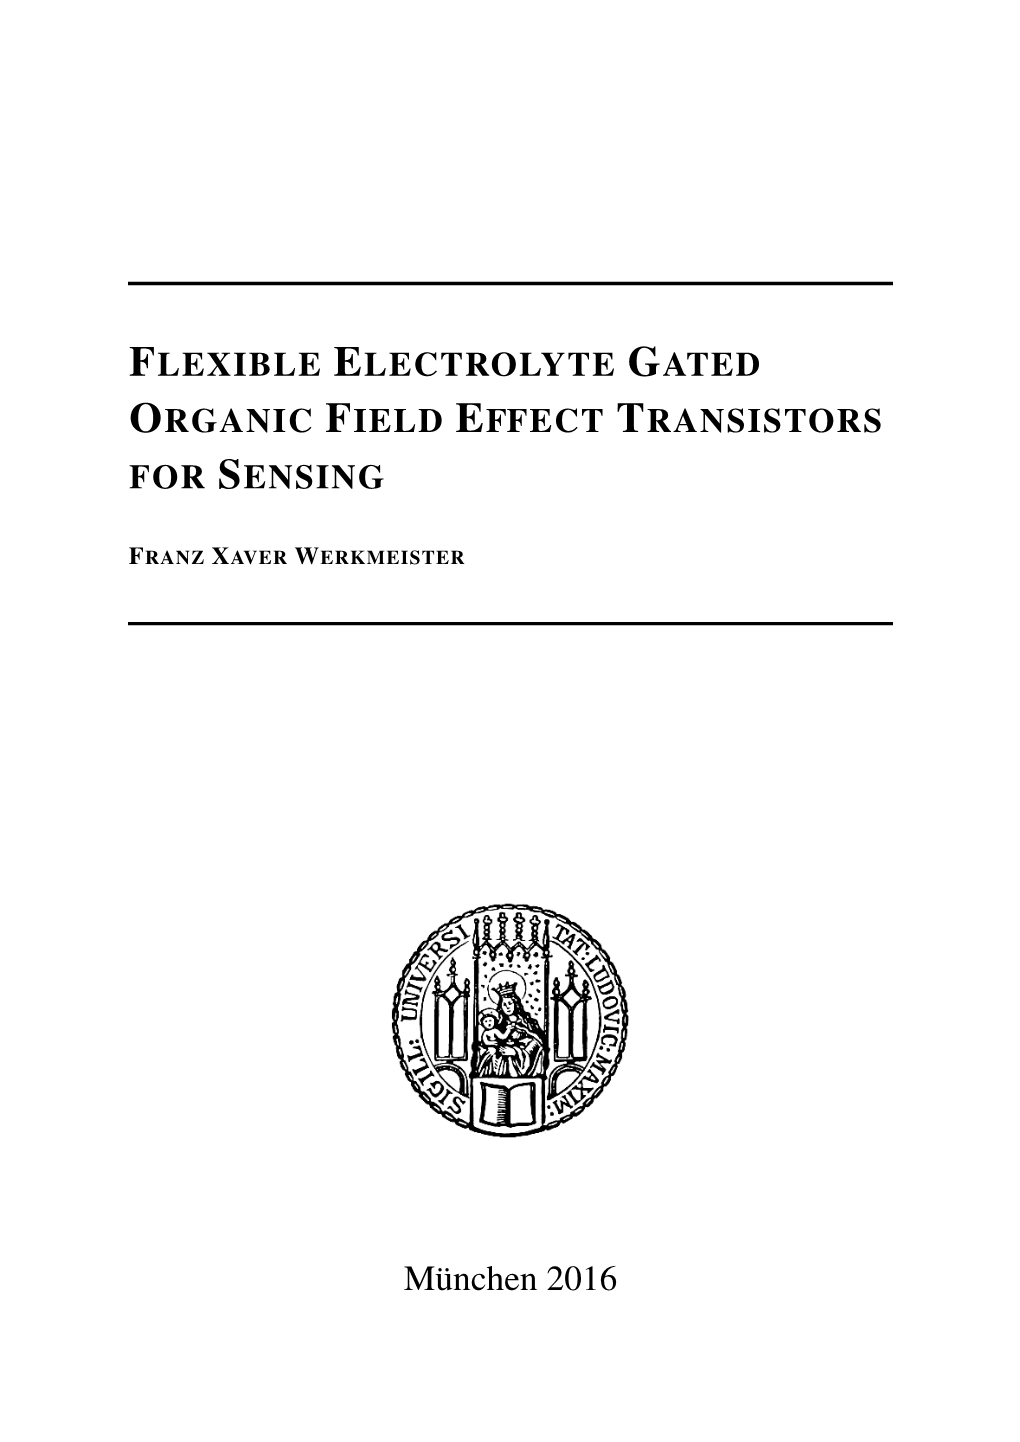 Flexible Electrolyte Gated Organic Field Effect Transistors for Sensing